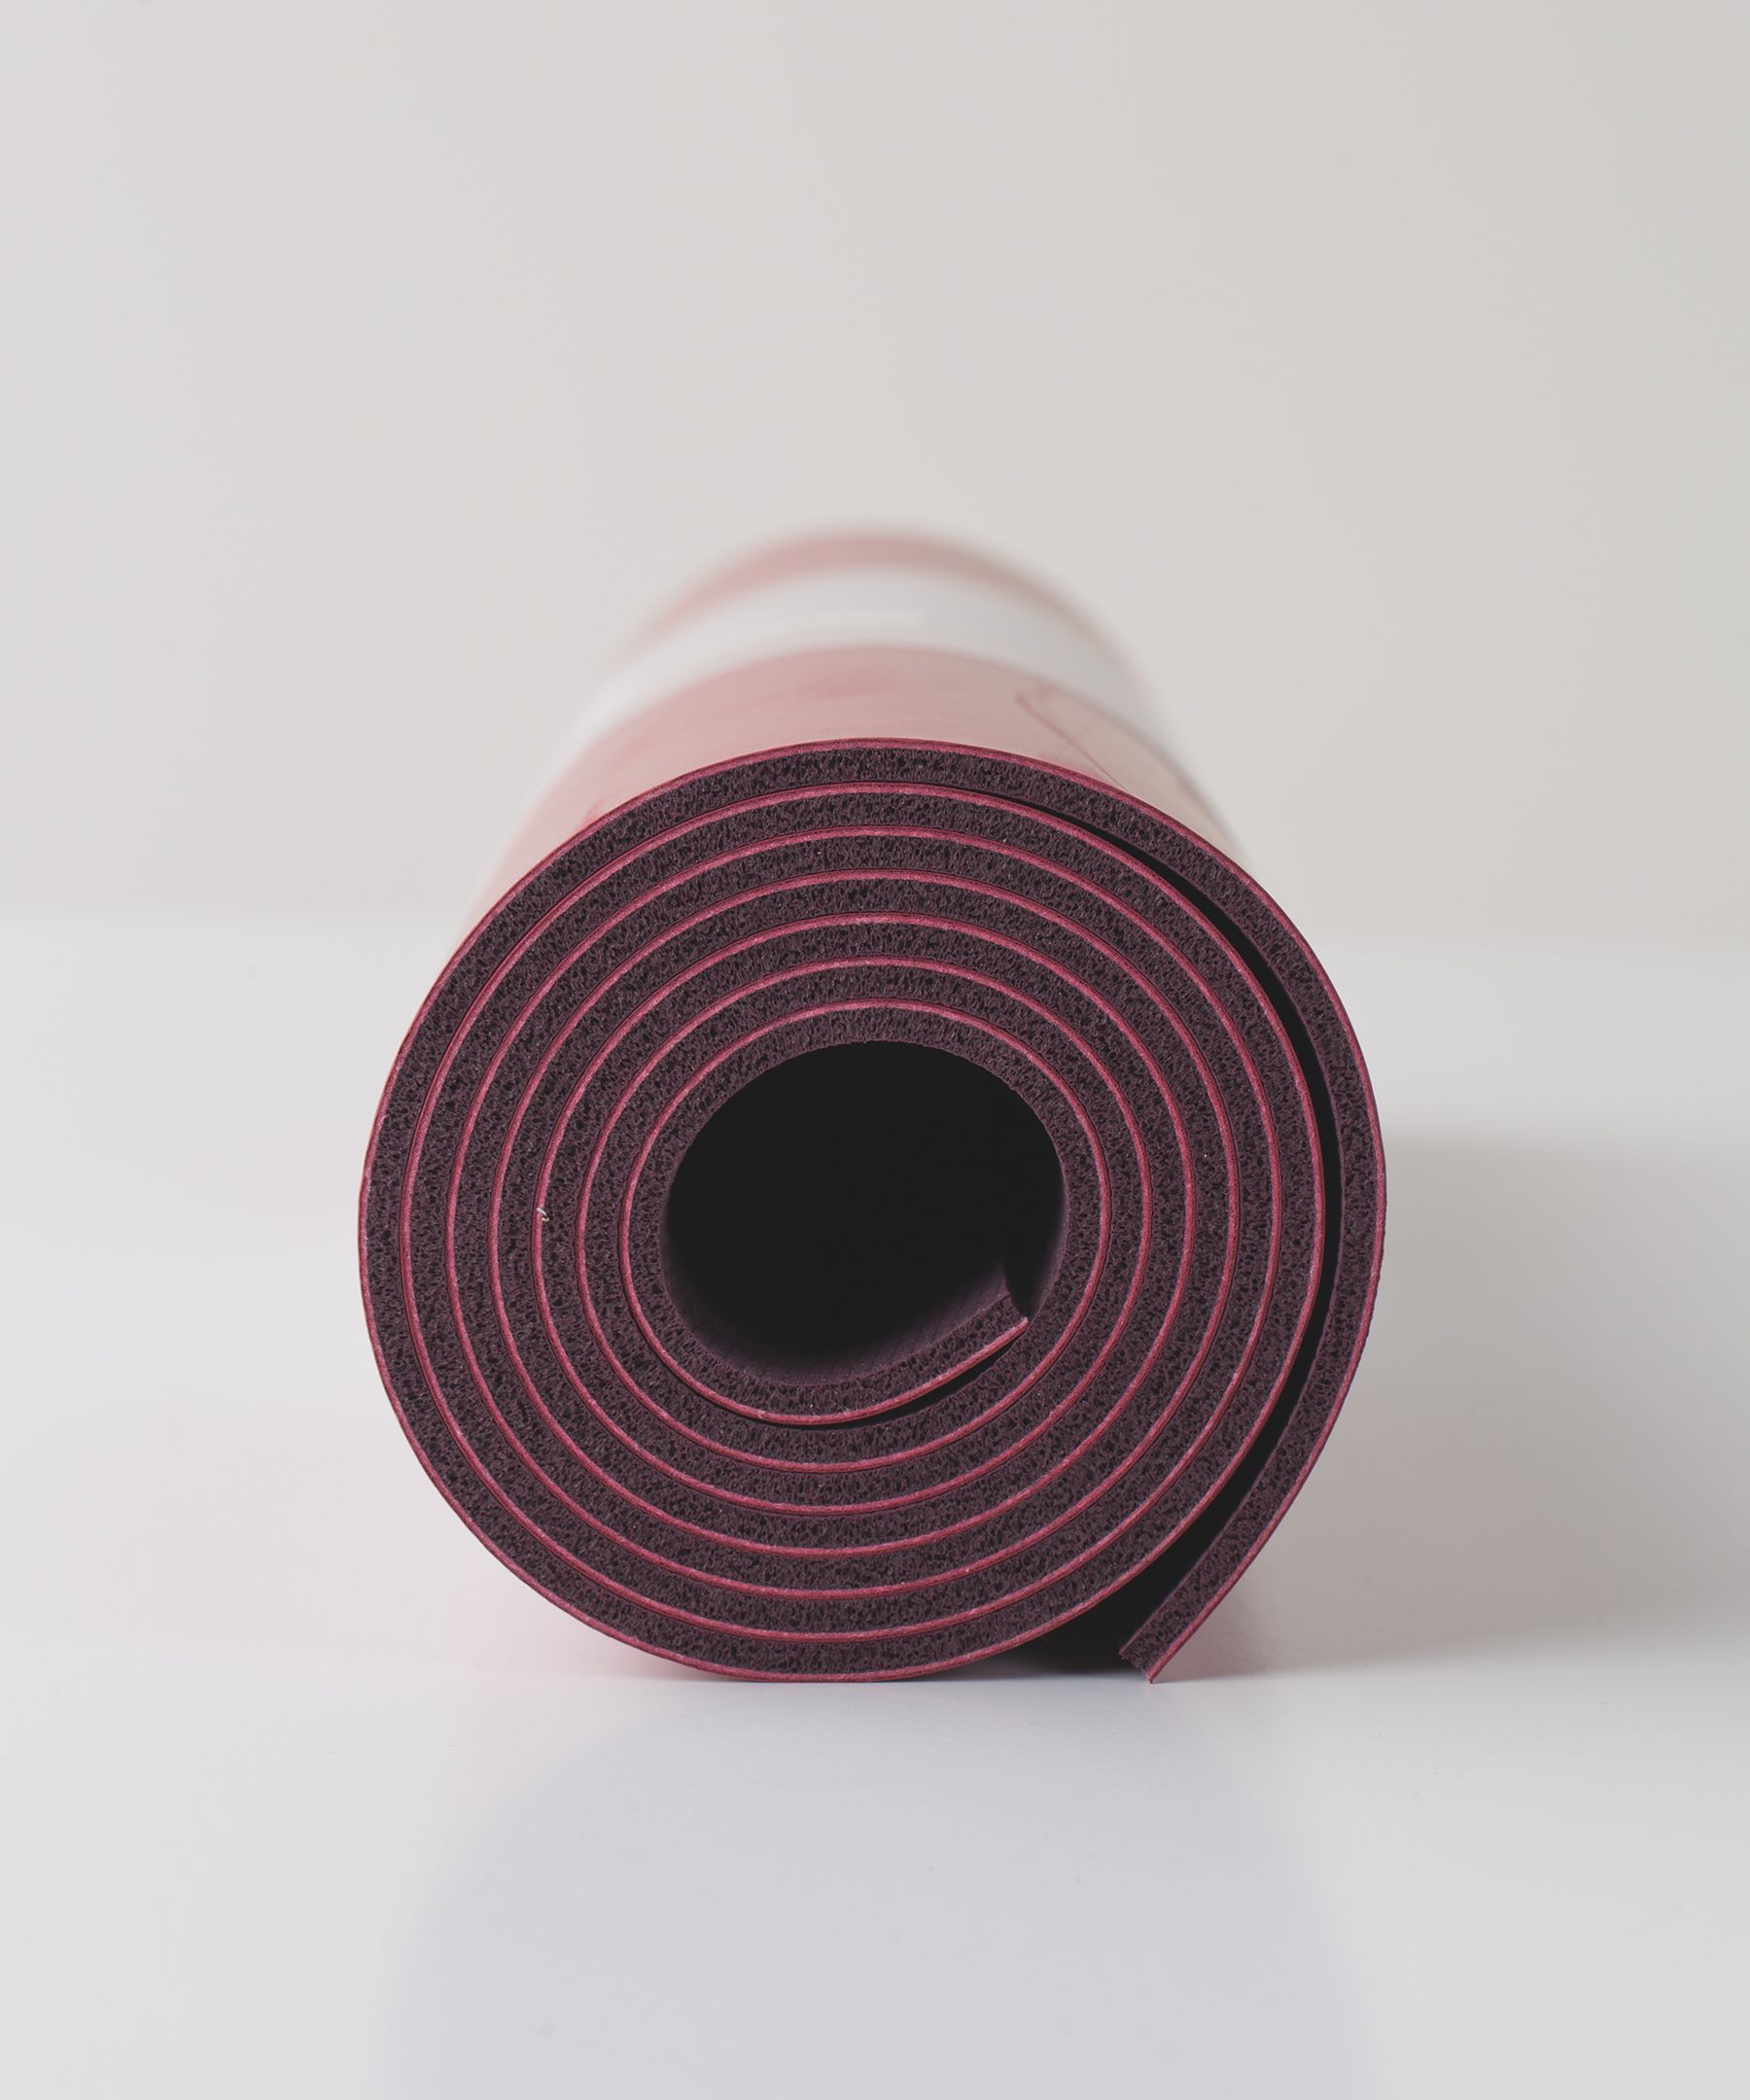 lululemon hot yoga mat